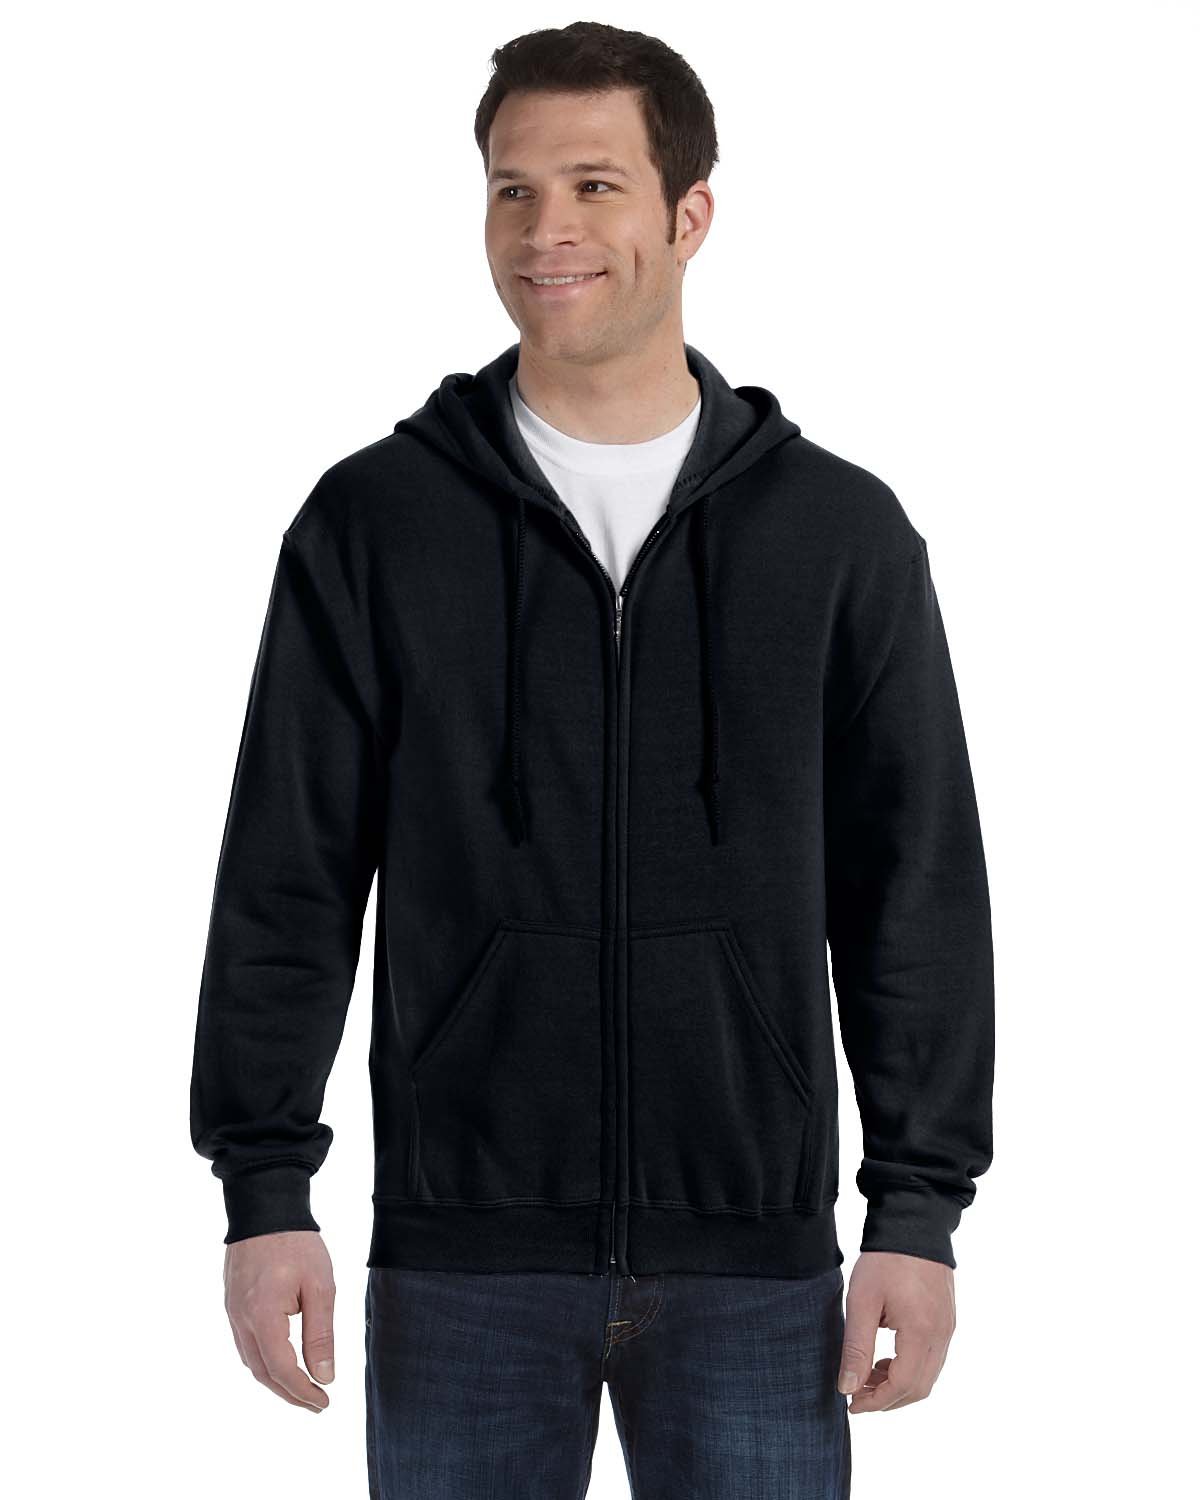 Unisex Heavy Blend Full Zip Hooded Sweatshirt